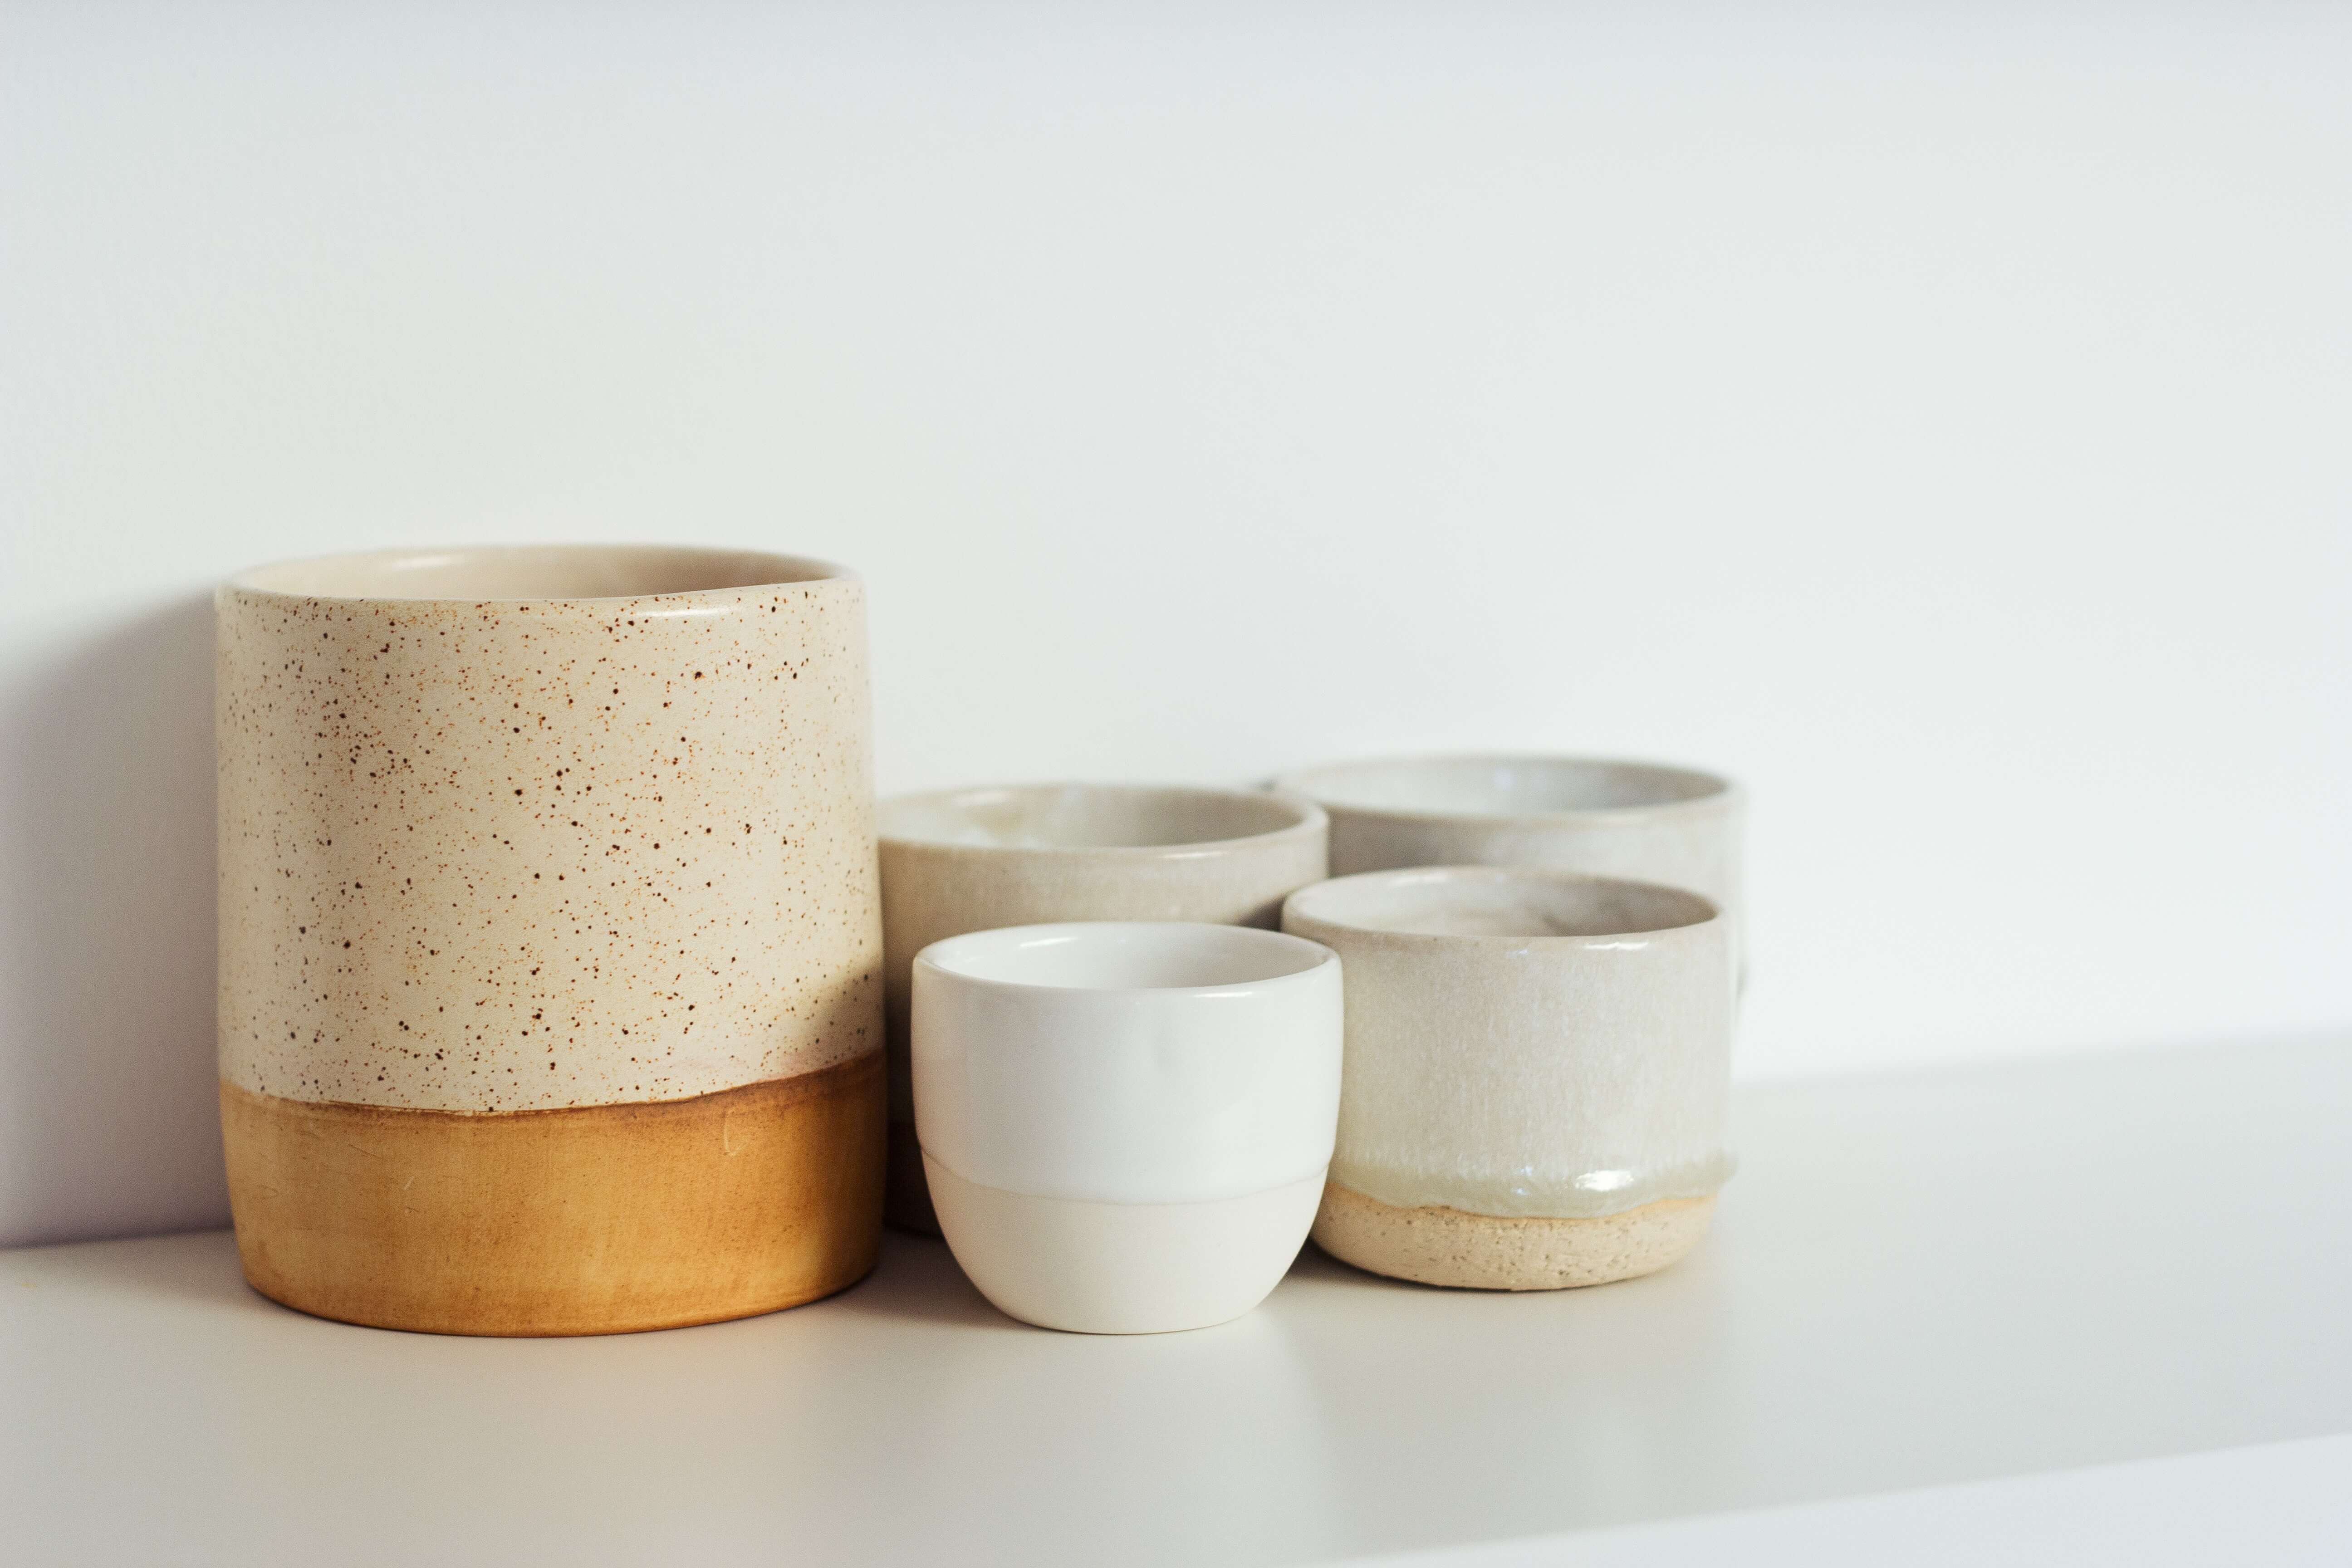 Ceramic cups of various sizes